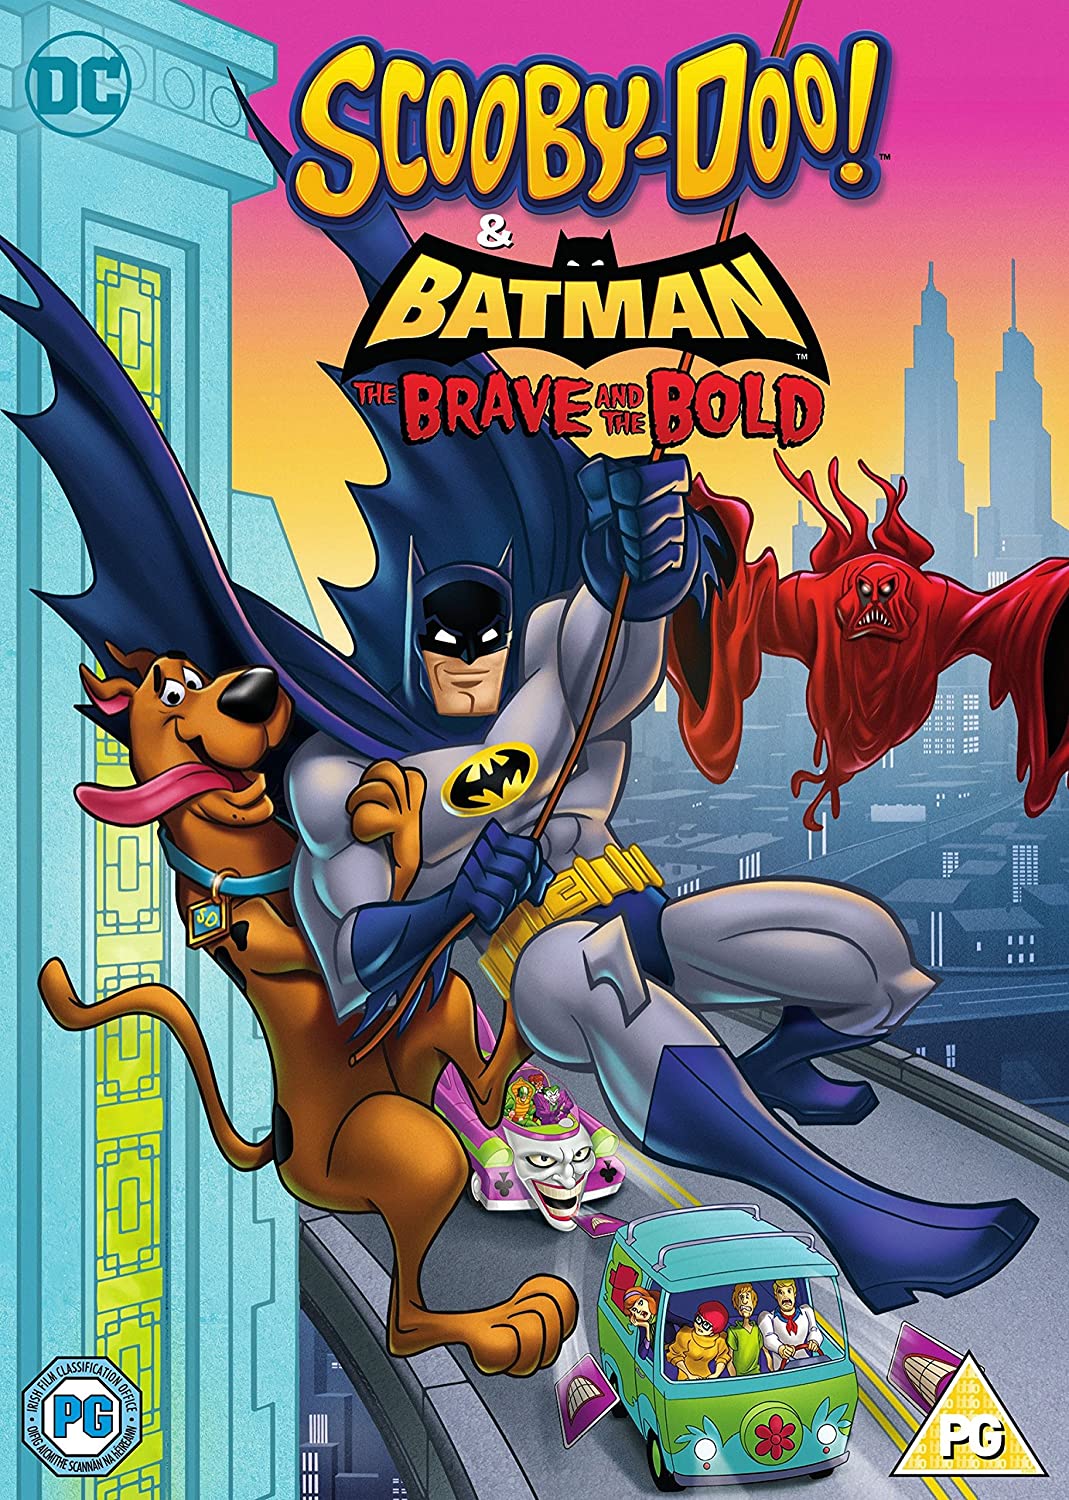 Scooby Doo & Batman: The Brave And The Bold [DVD] [2018]: Jake Castorena, Michael Jelenic, James Tucker: Movies & TV